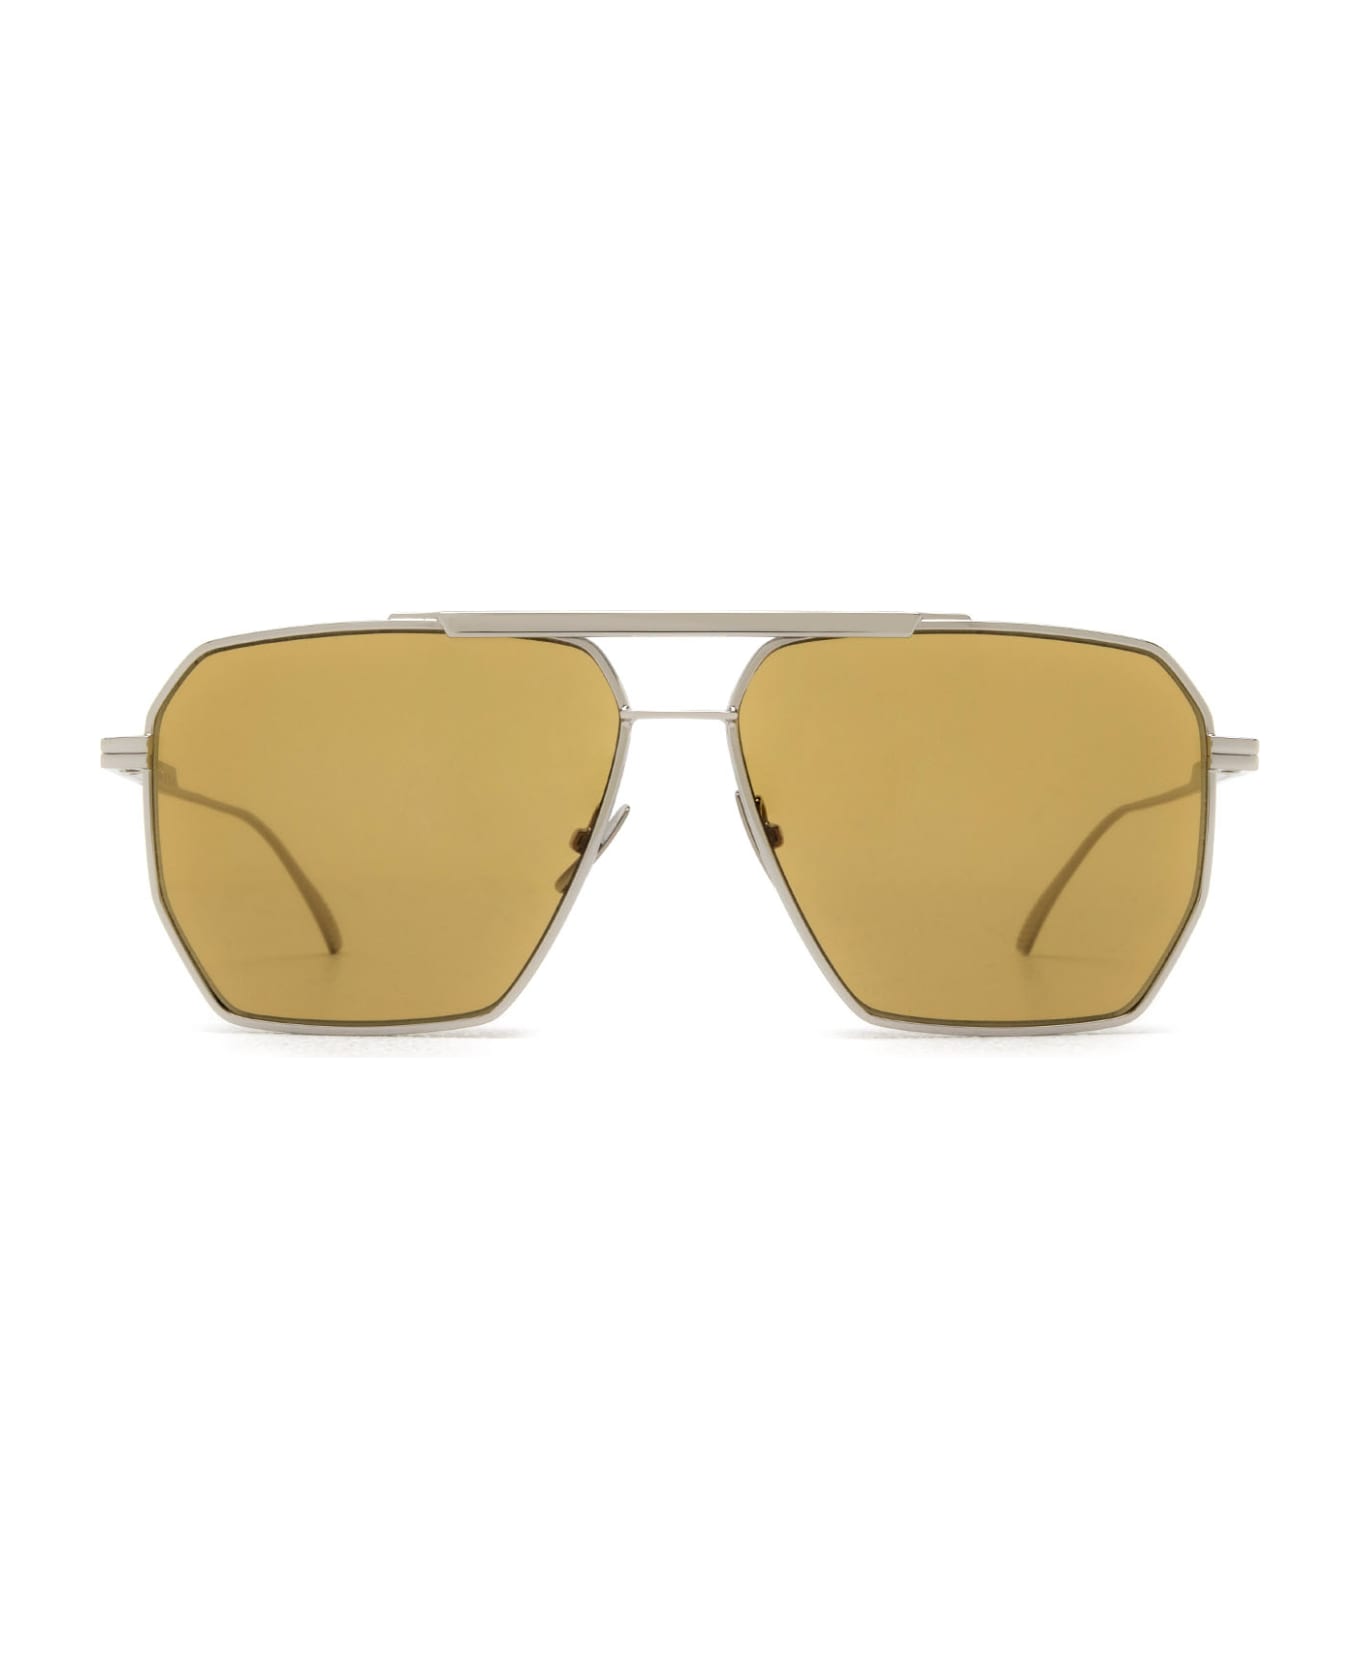 Bottega Veneta Eyewear Bv1012s Silver Sunglasses - Silver